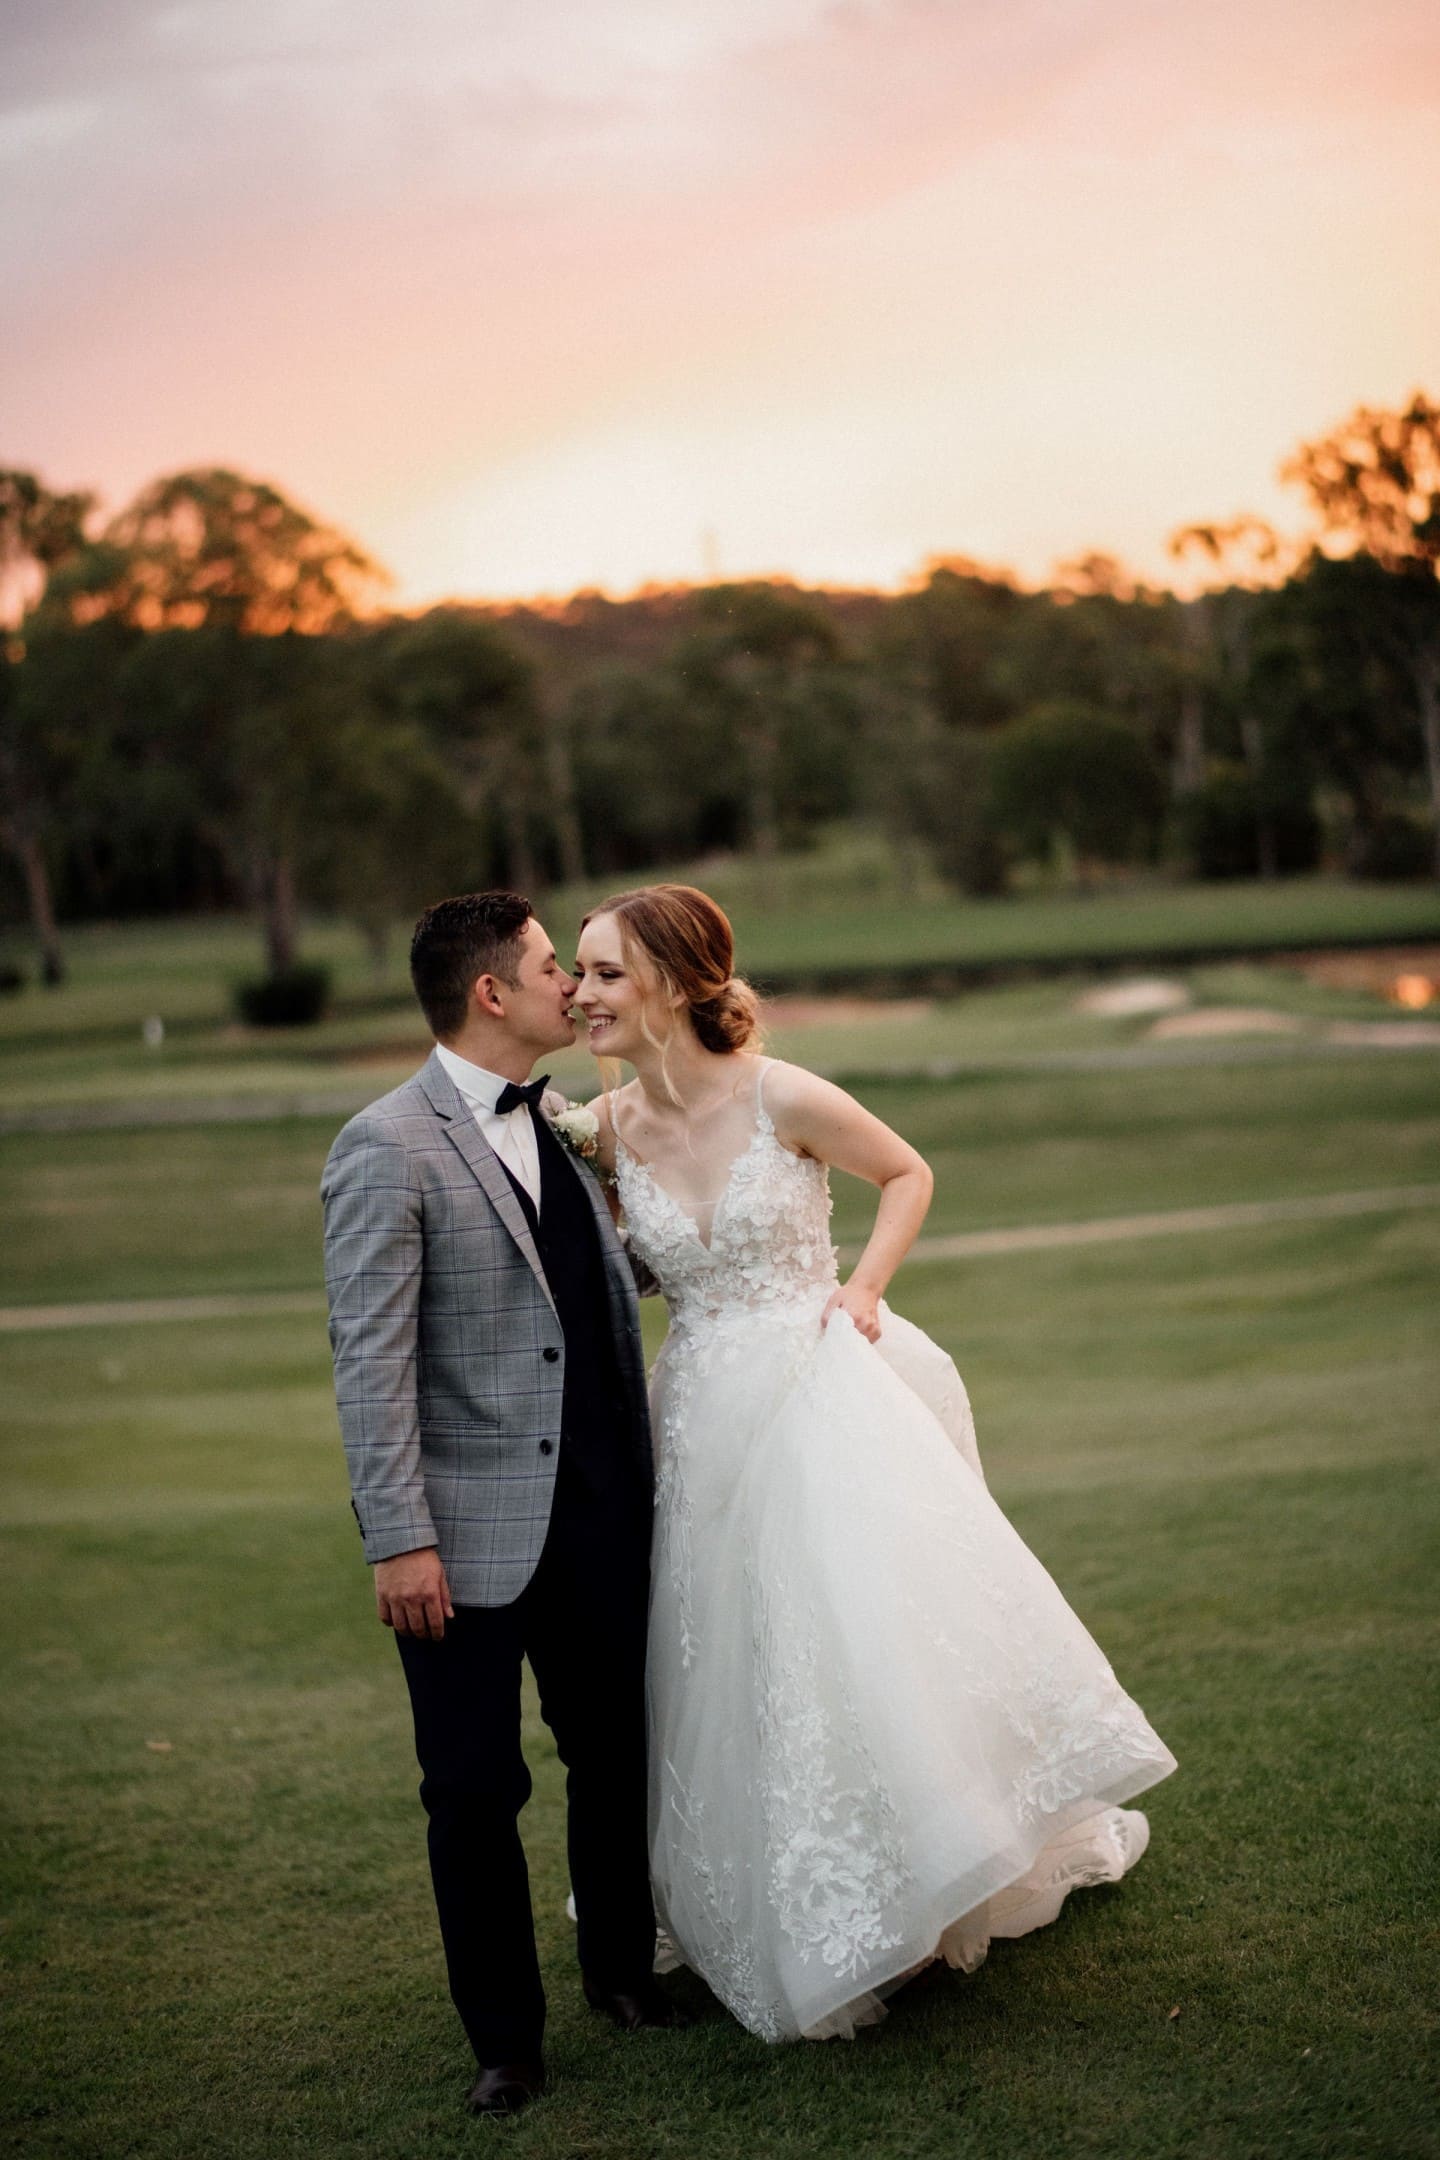 Karlea & Andrew's Glorious Golf Club Wedding